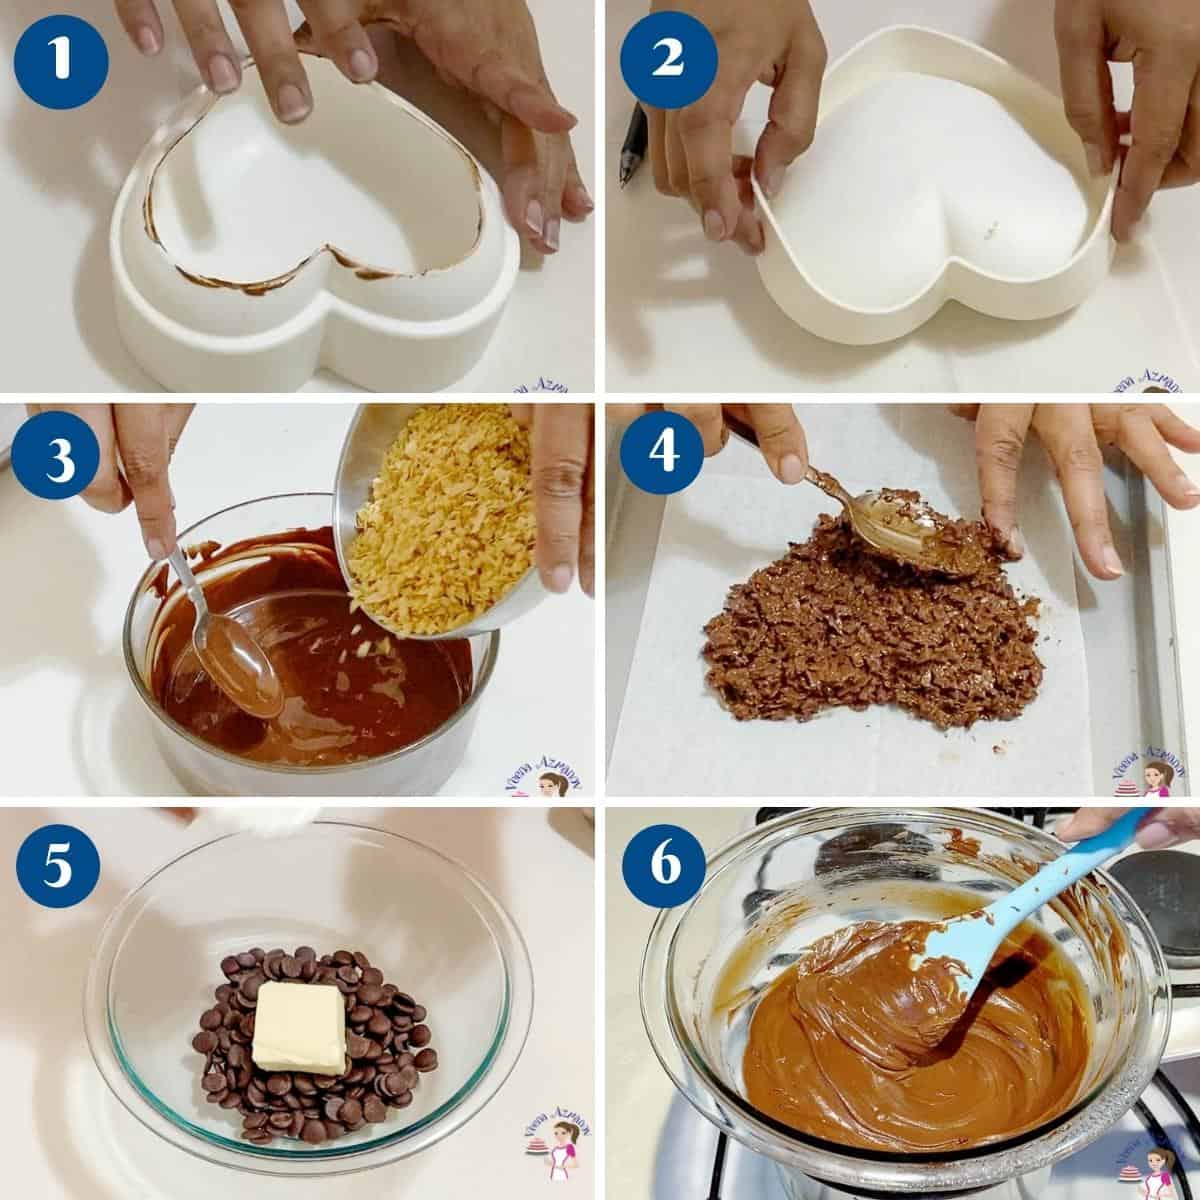 Jeakmo Heart Shape DIY Silicone Mousse Pudding Chocolate Dessert Cake Mold Baking Tool Cake Molds for Baking Shapes Reusable Pastry Making Utensils White 